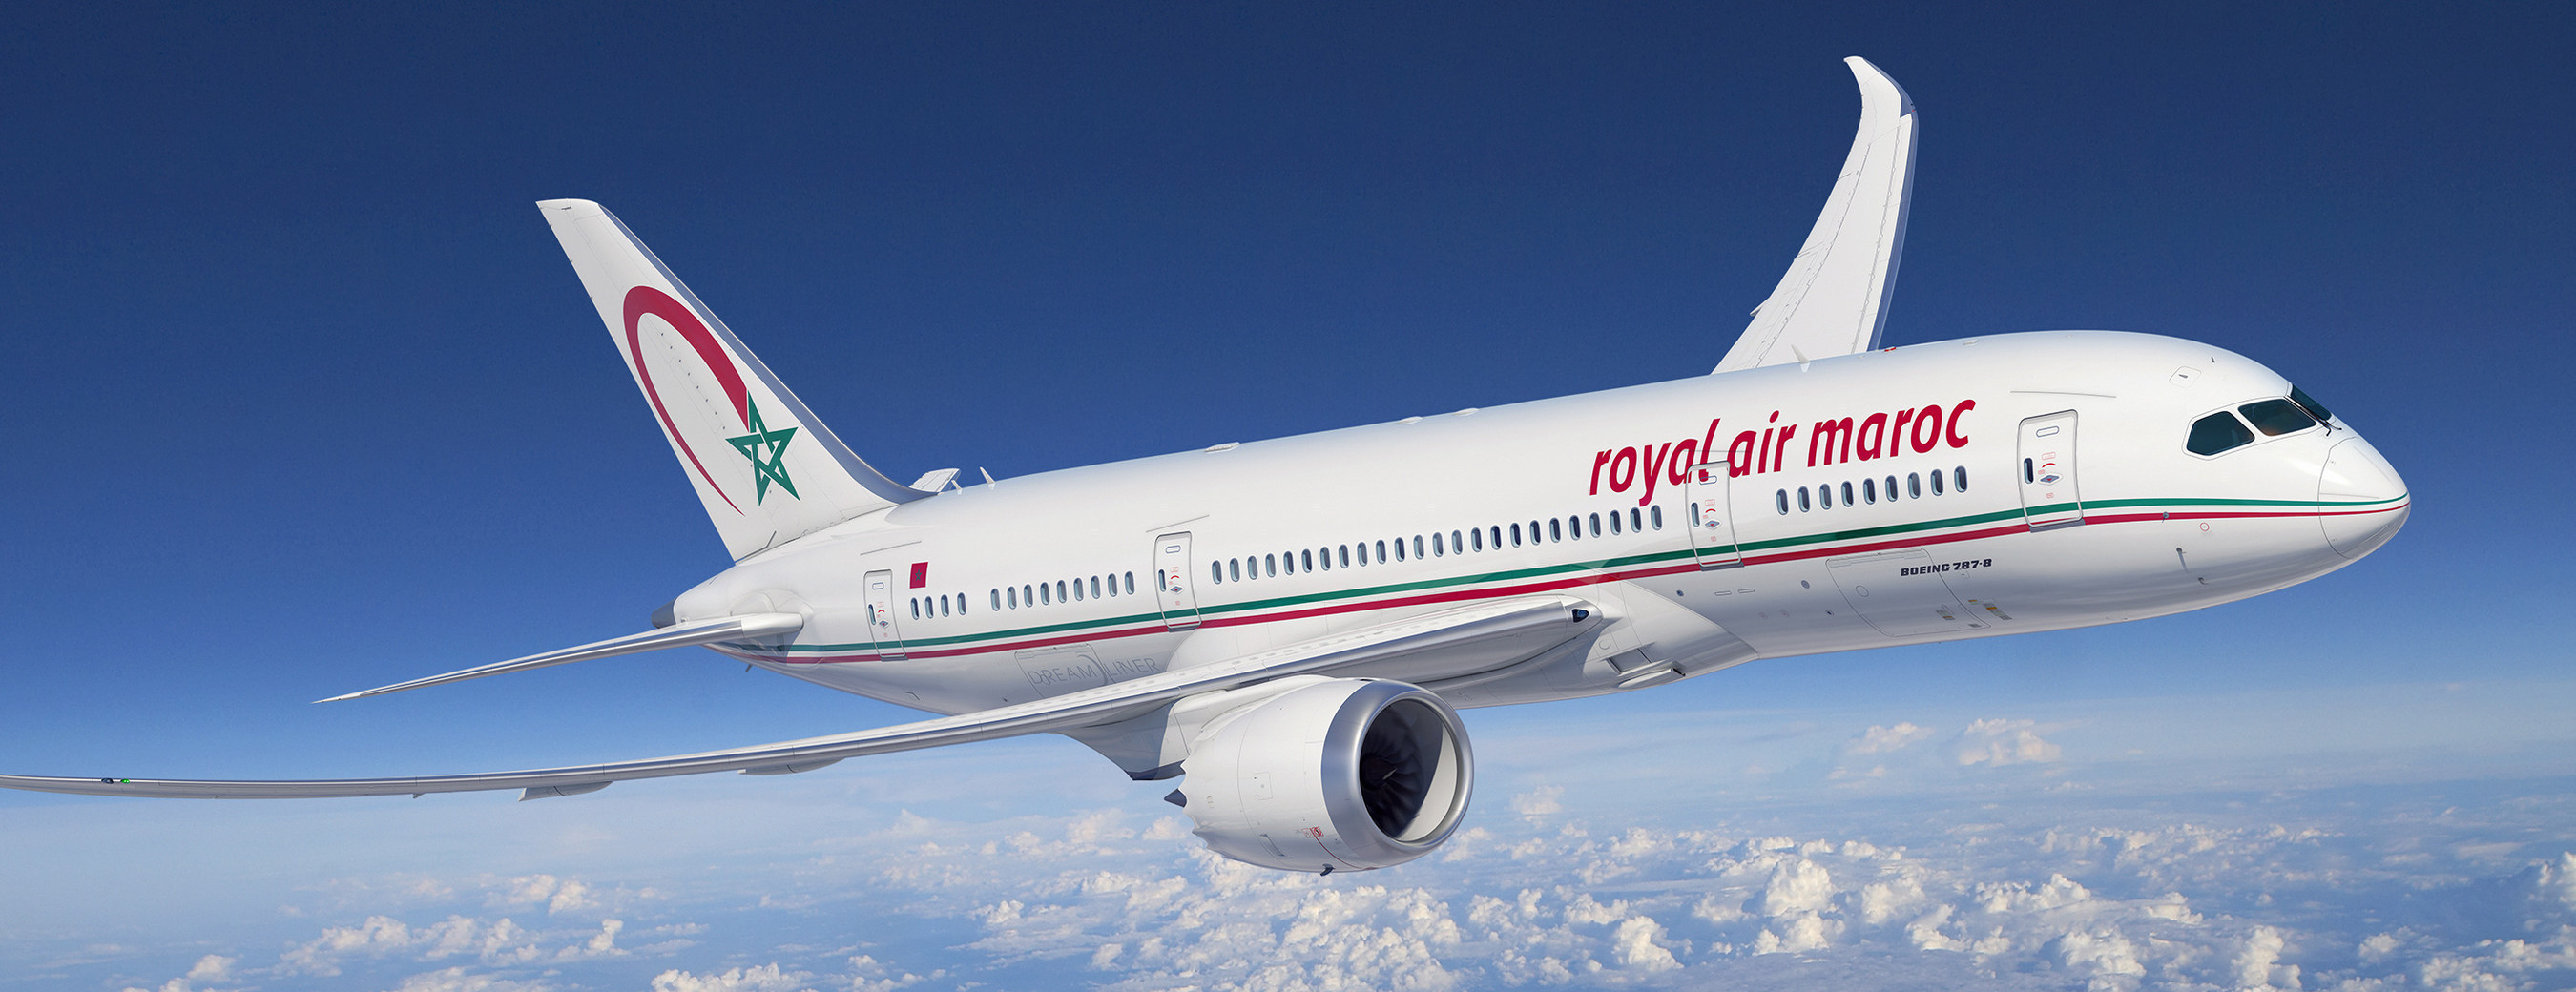 Royal Air Maroc membre officiel de l’Alliance Oneworld